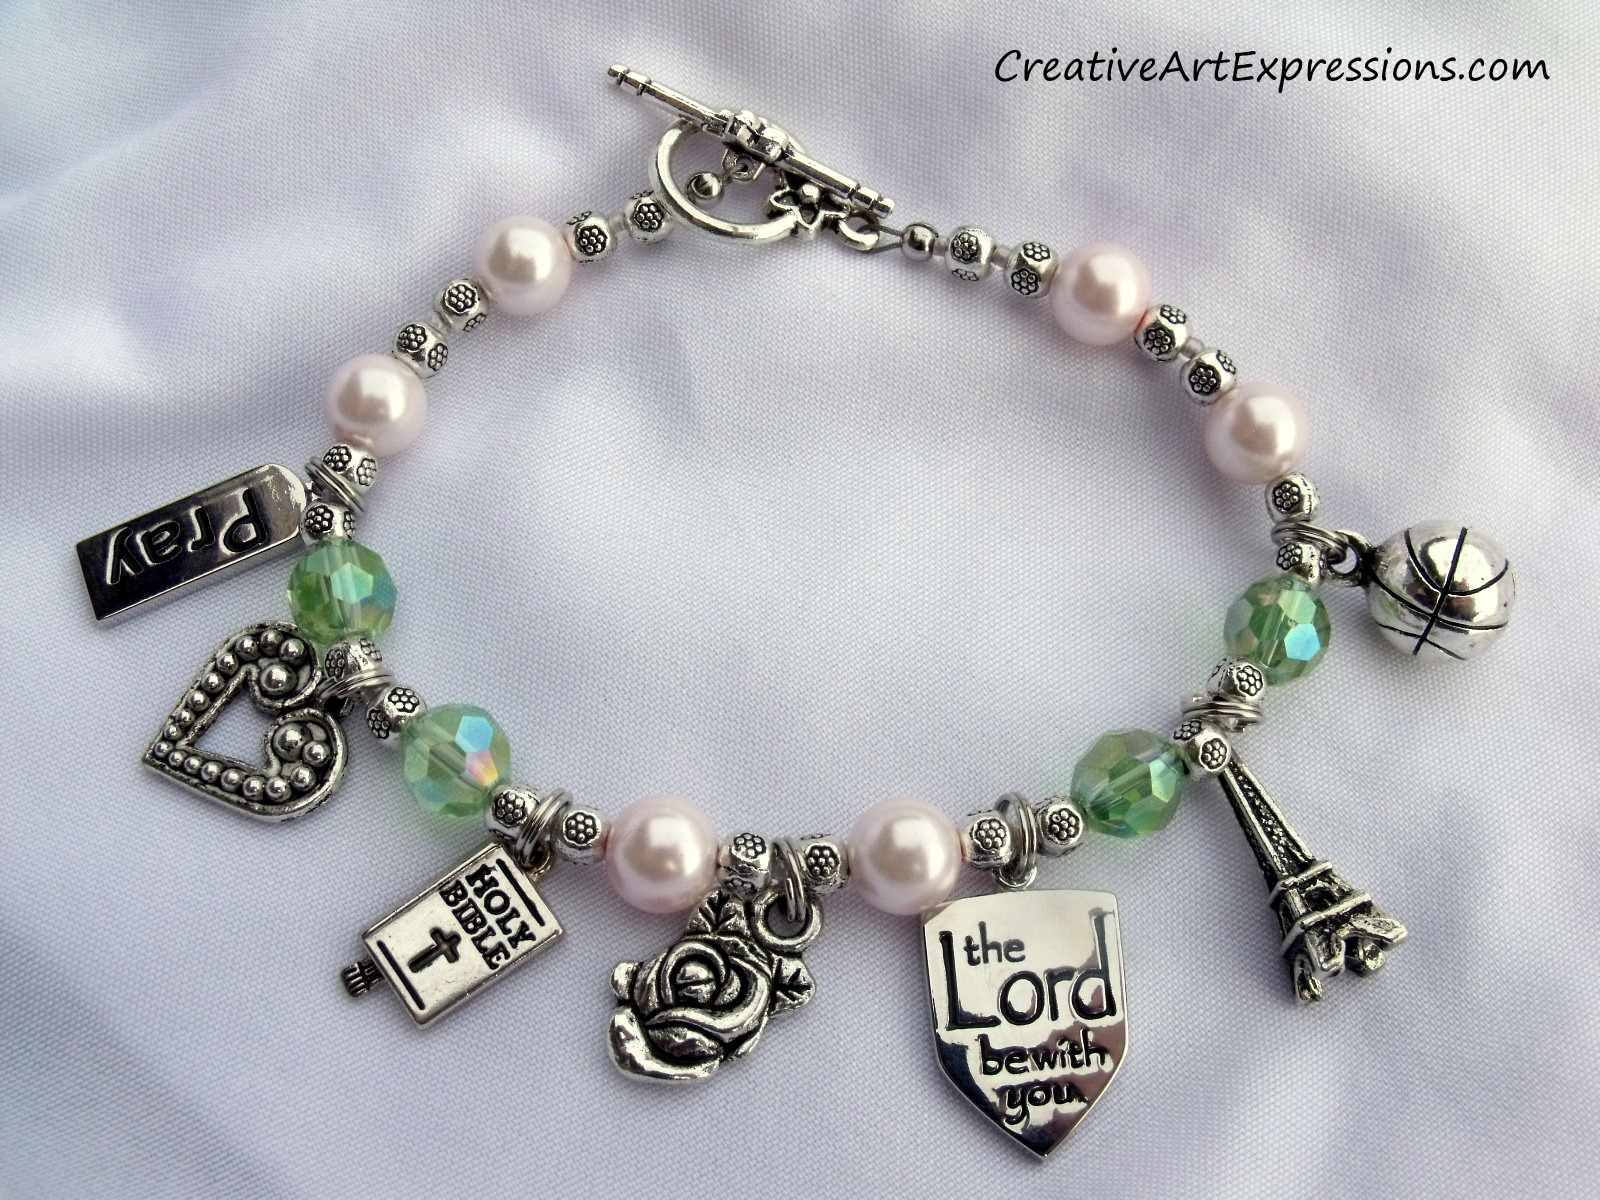  Creative Art Expressions Handmade Pink & Green Charm Bracelet